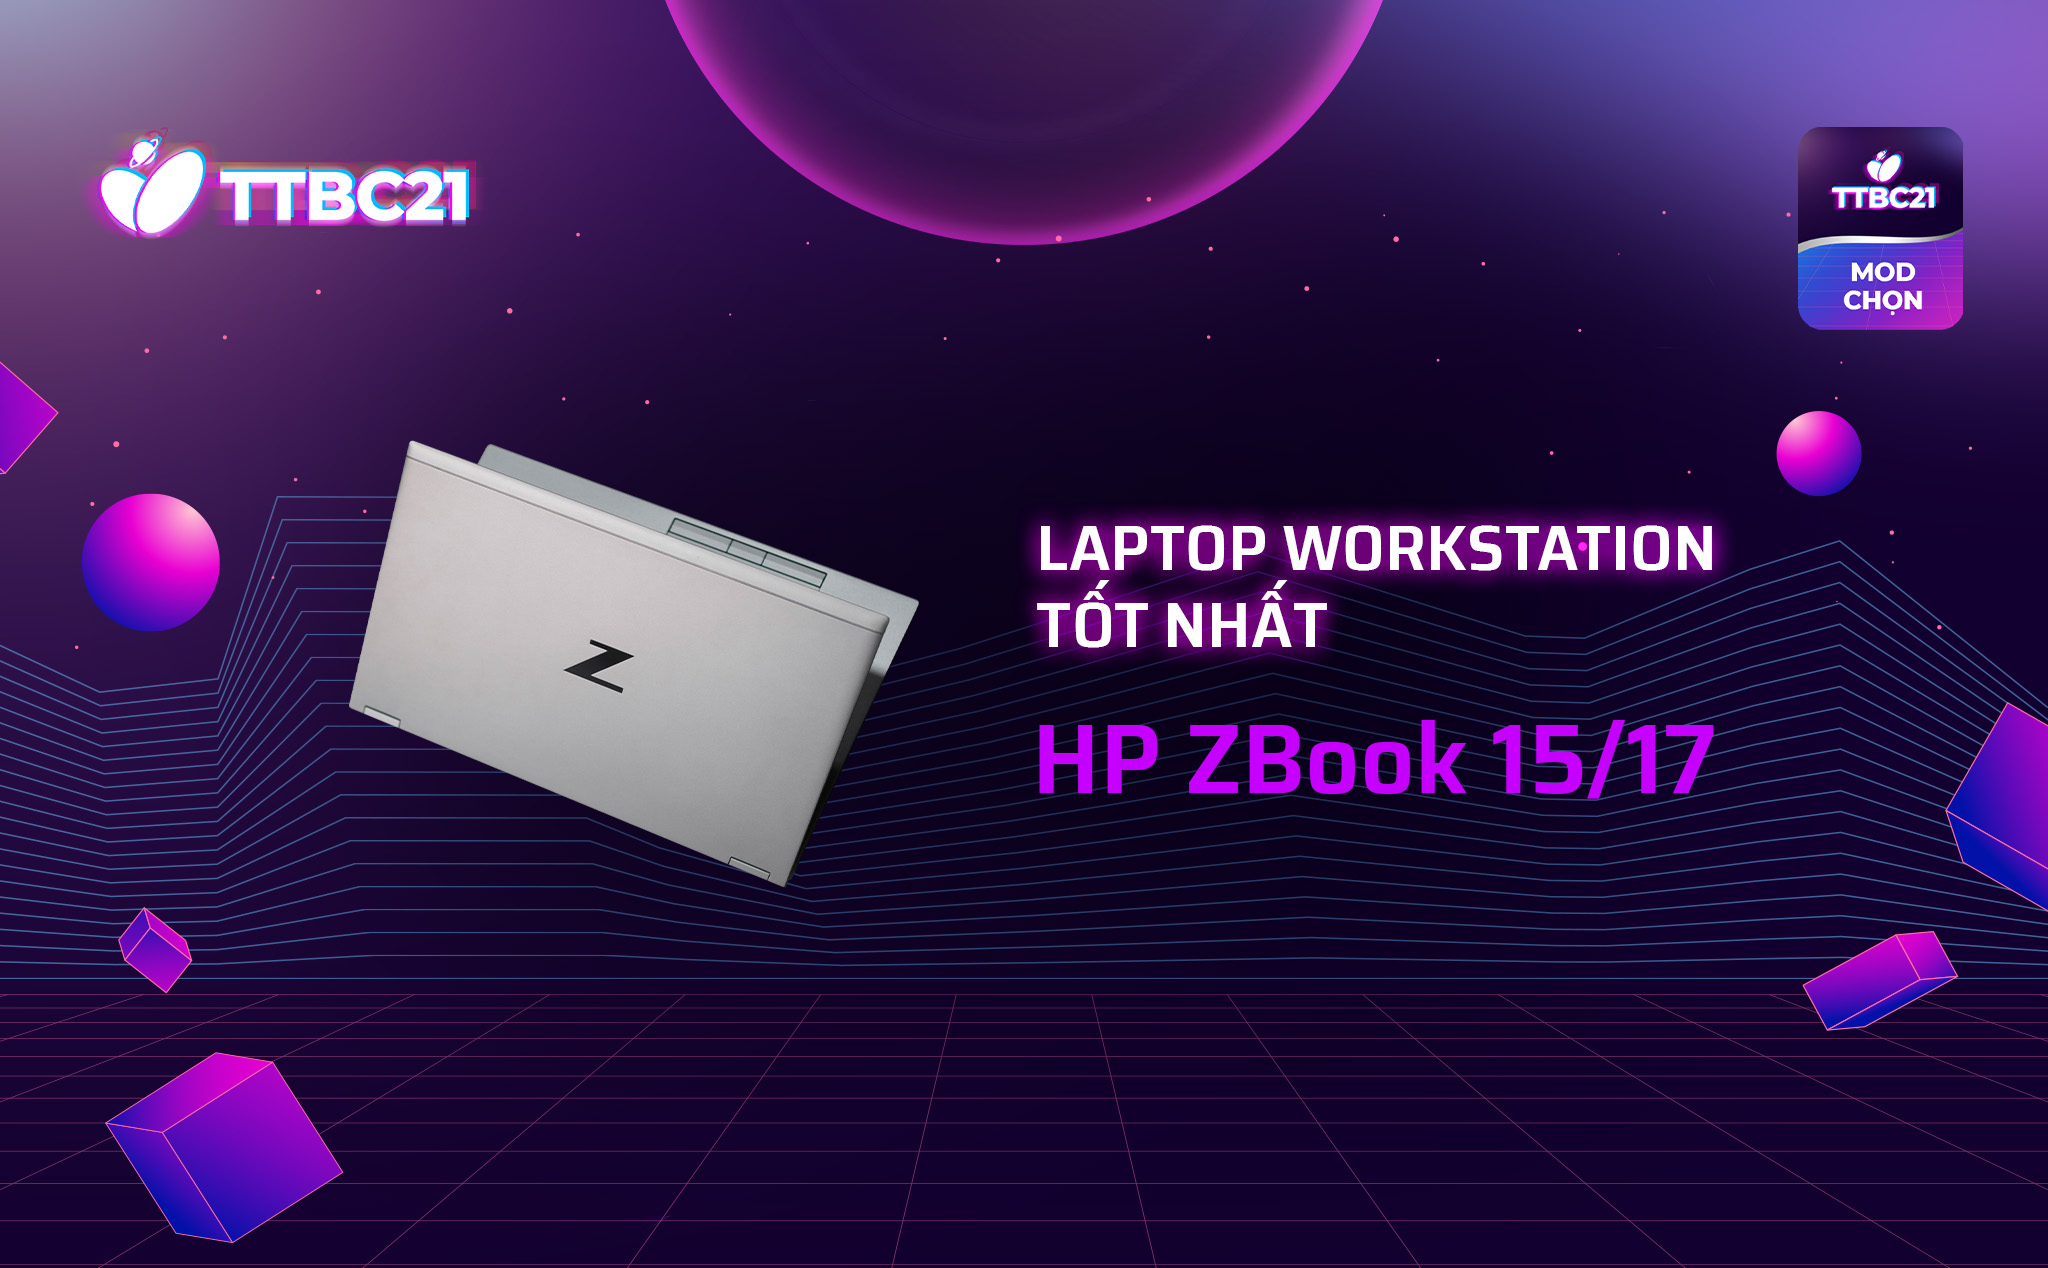 TTBC21 - Mod Choice: Laptop workstation tốt nhất - HP ZBook 15/17